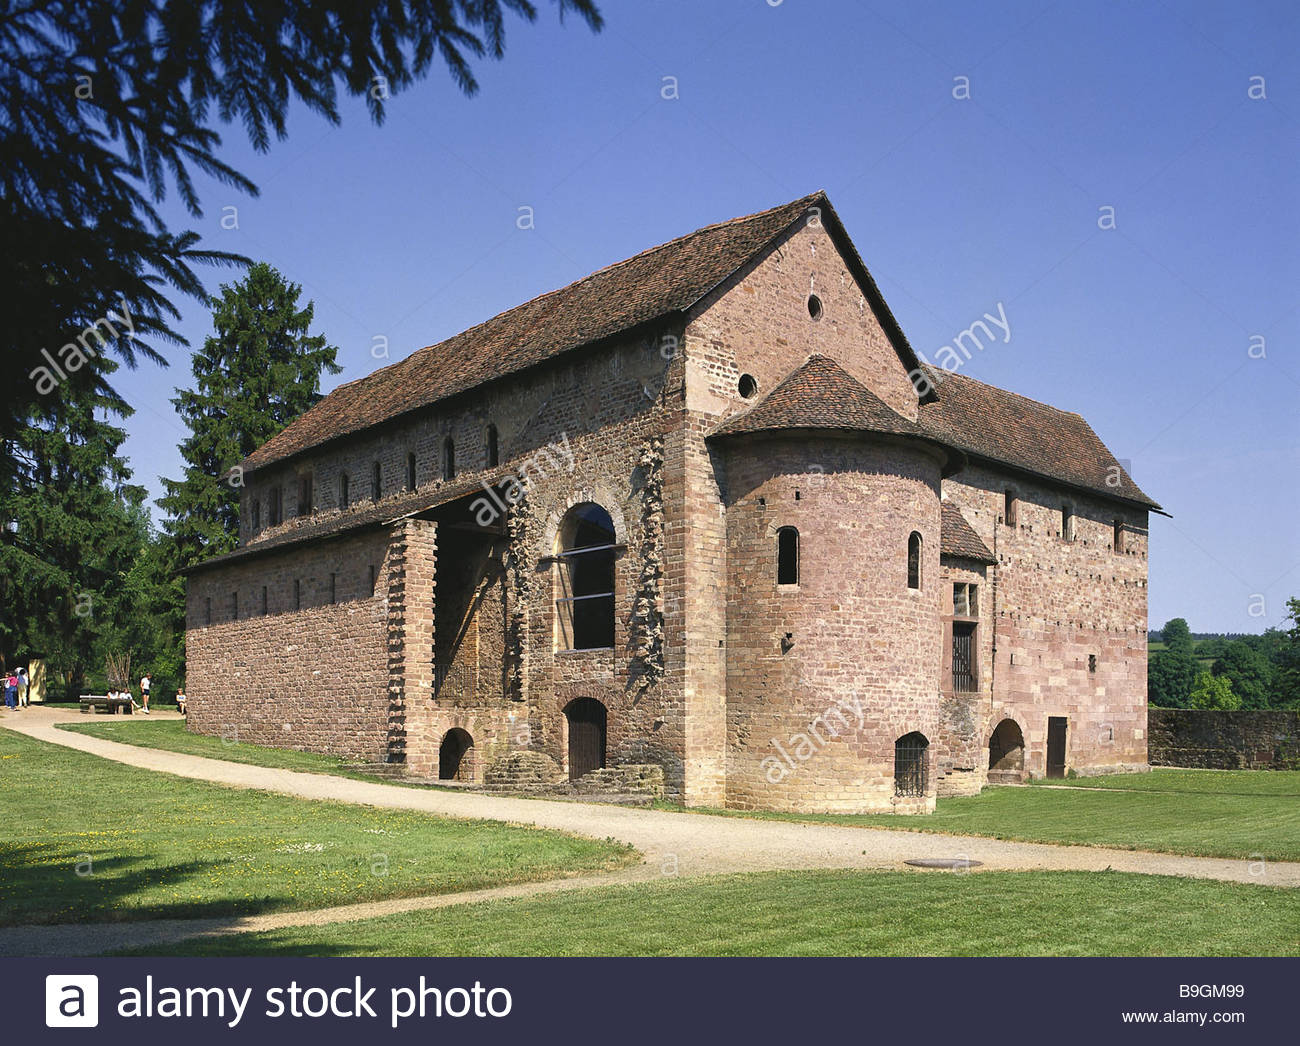 Image result for carolingian architecture